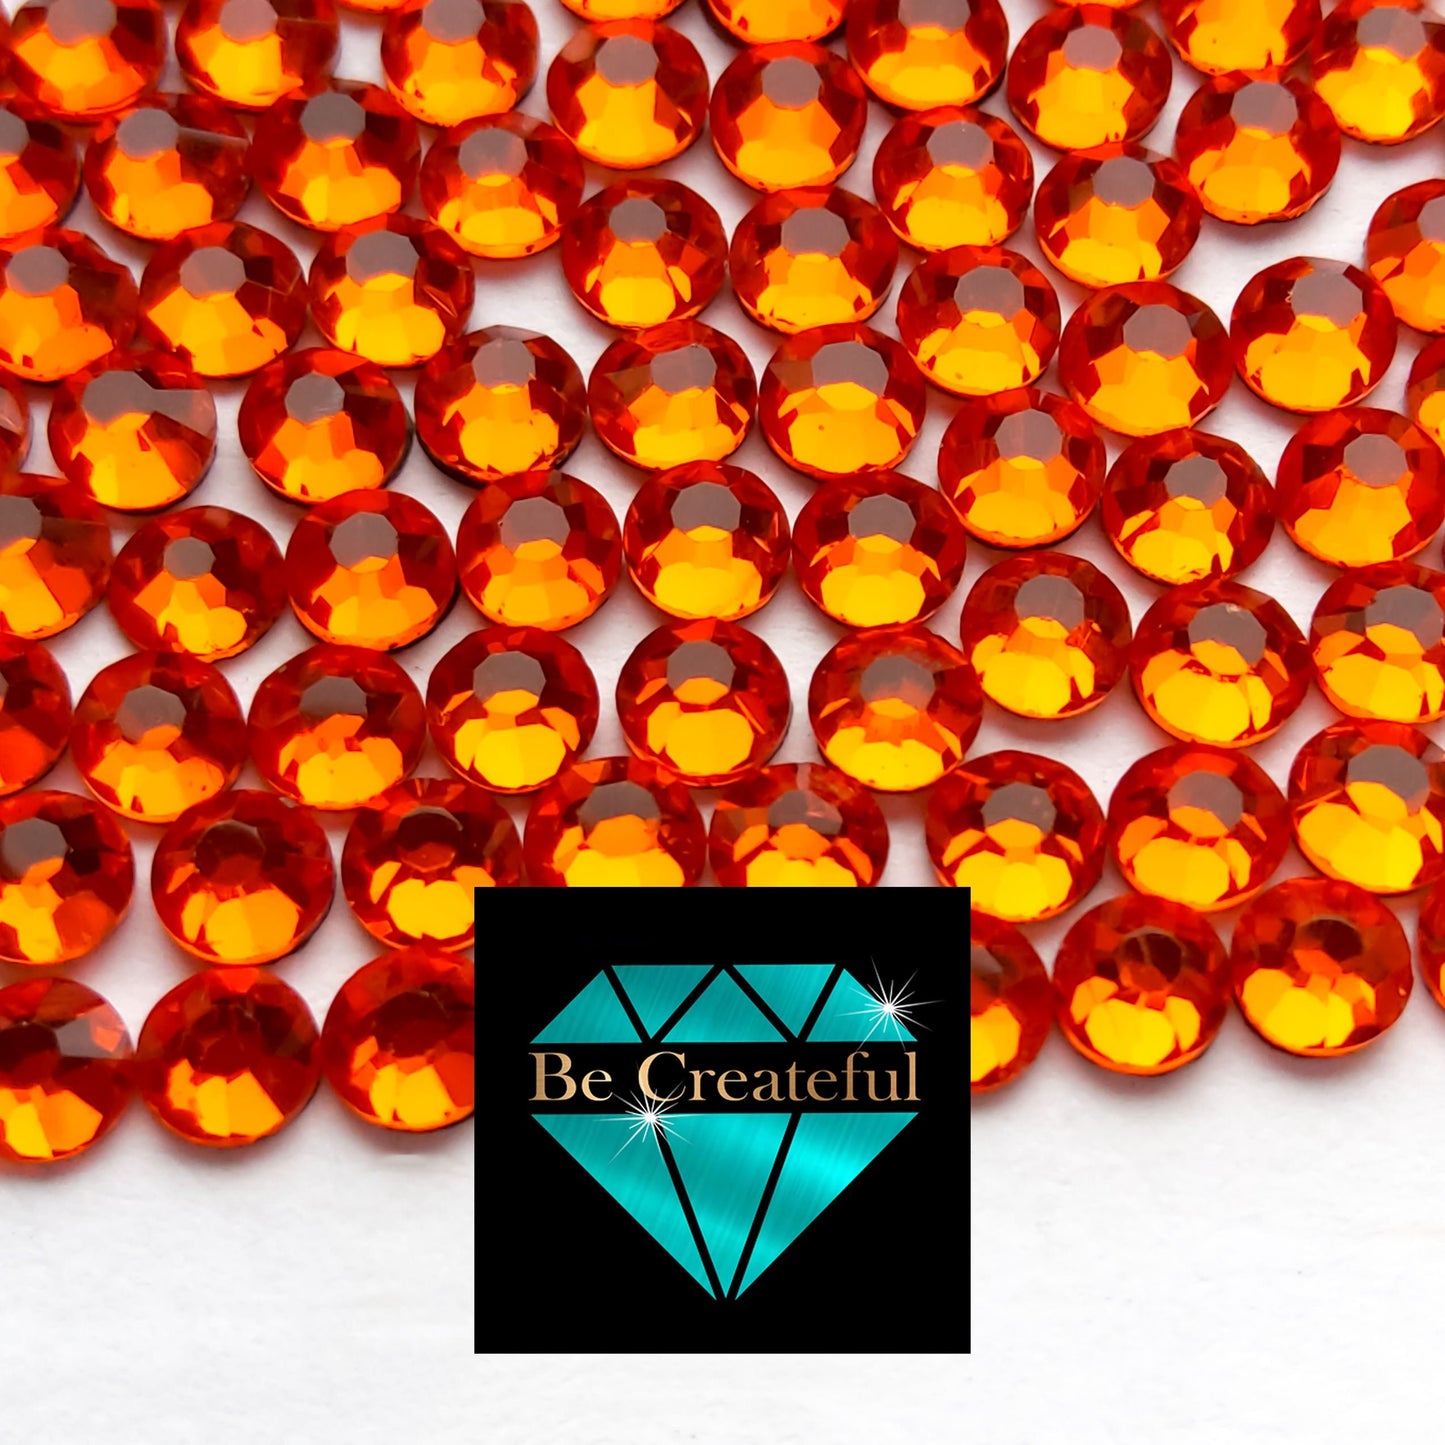 DMC Orange Glass Hotfix Rhinestones - Be Createful, Beautiful Rhinestones at wholesale prices.